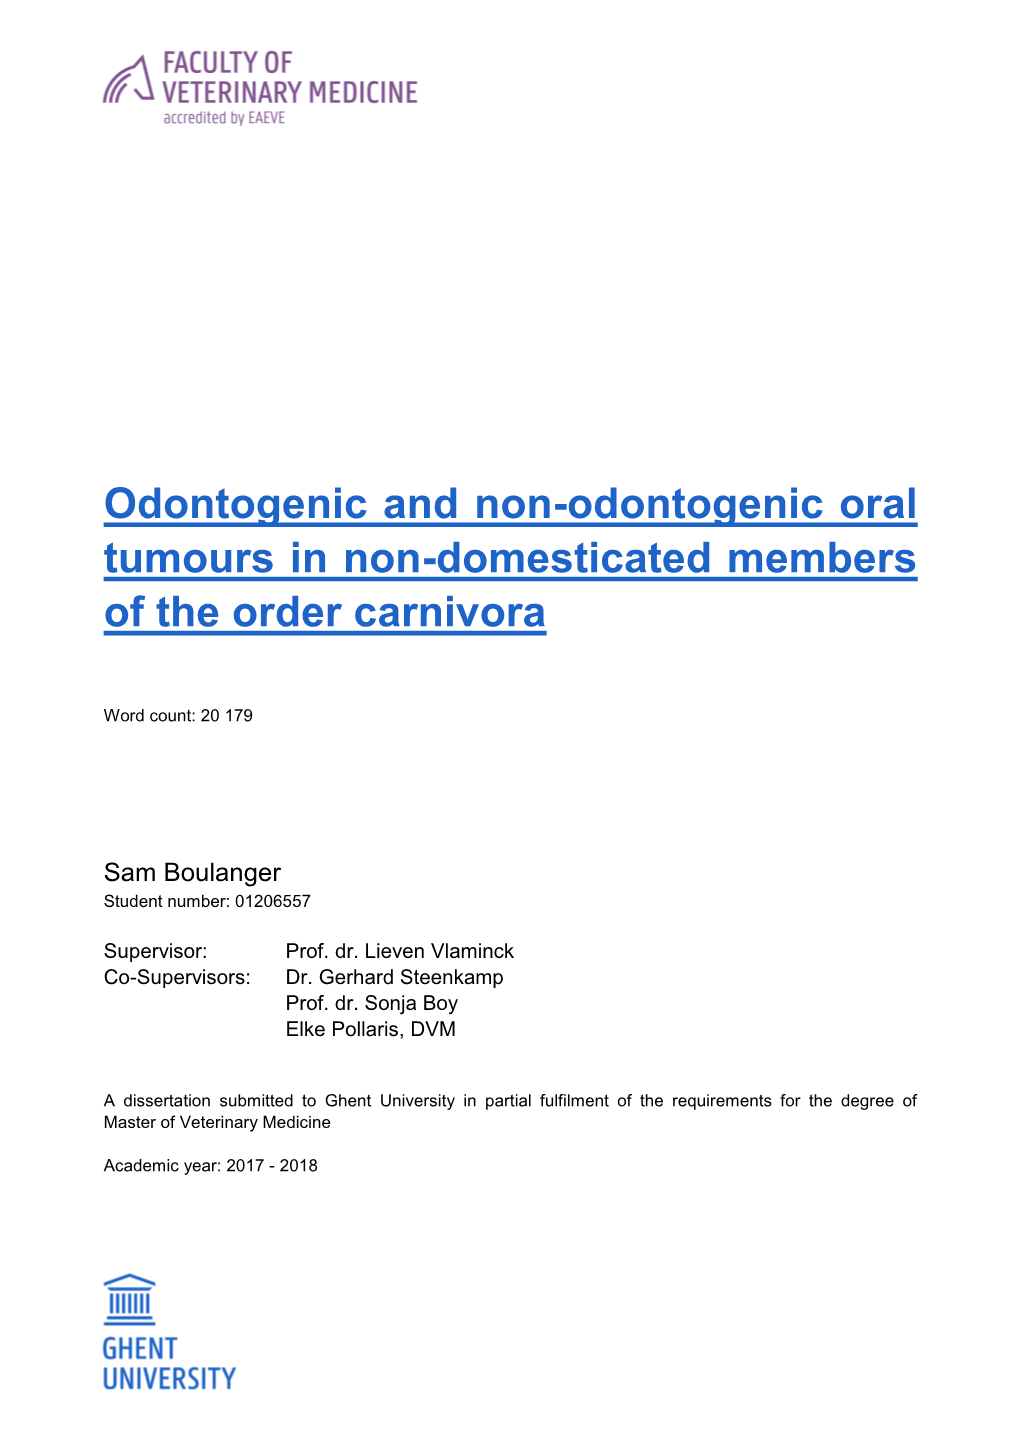 Odontogenic and Non-Odontogenic Oral Tumours in Non-Domesticated Members of the Order Carnivora